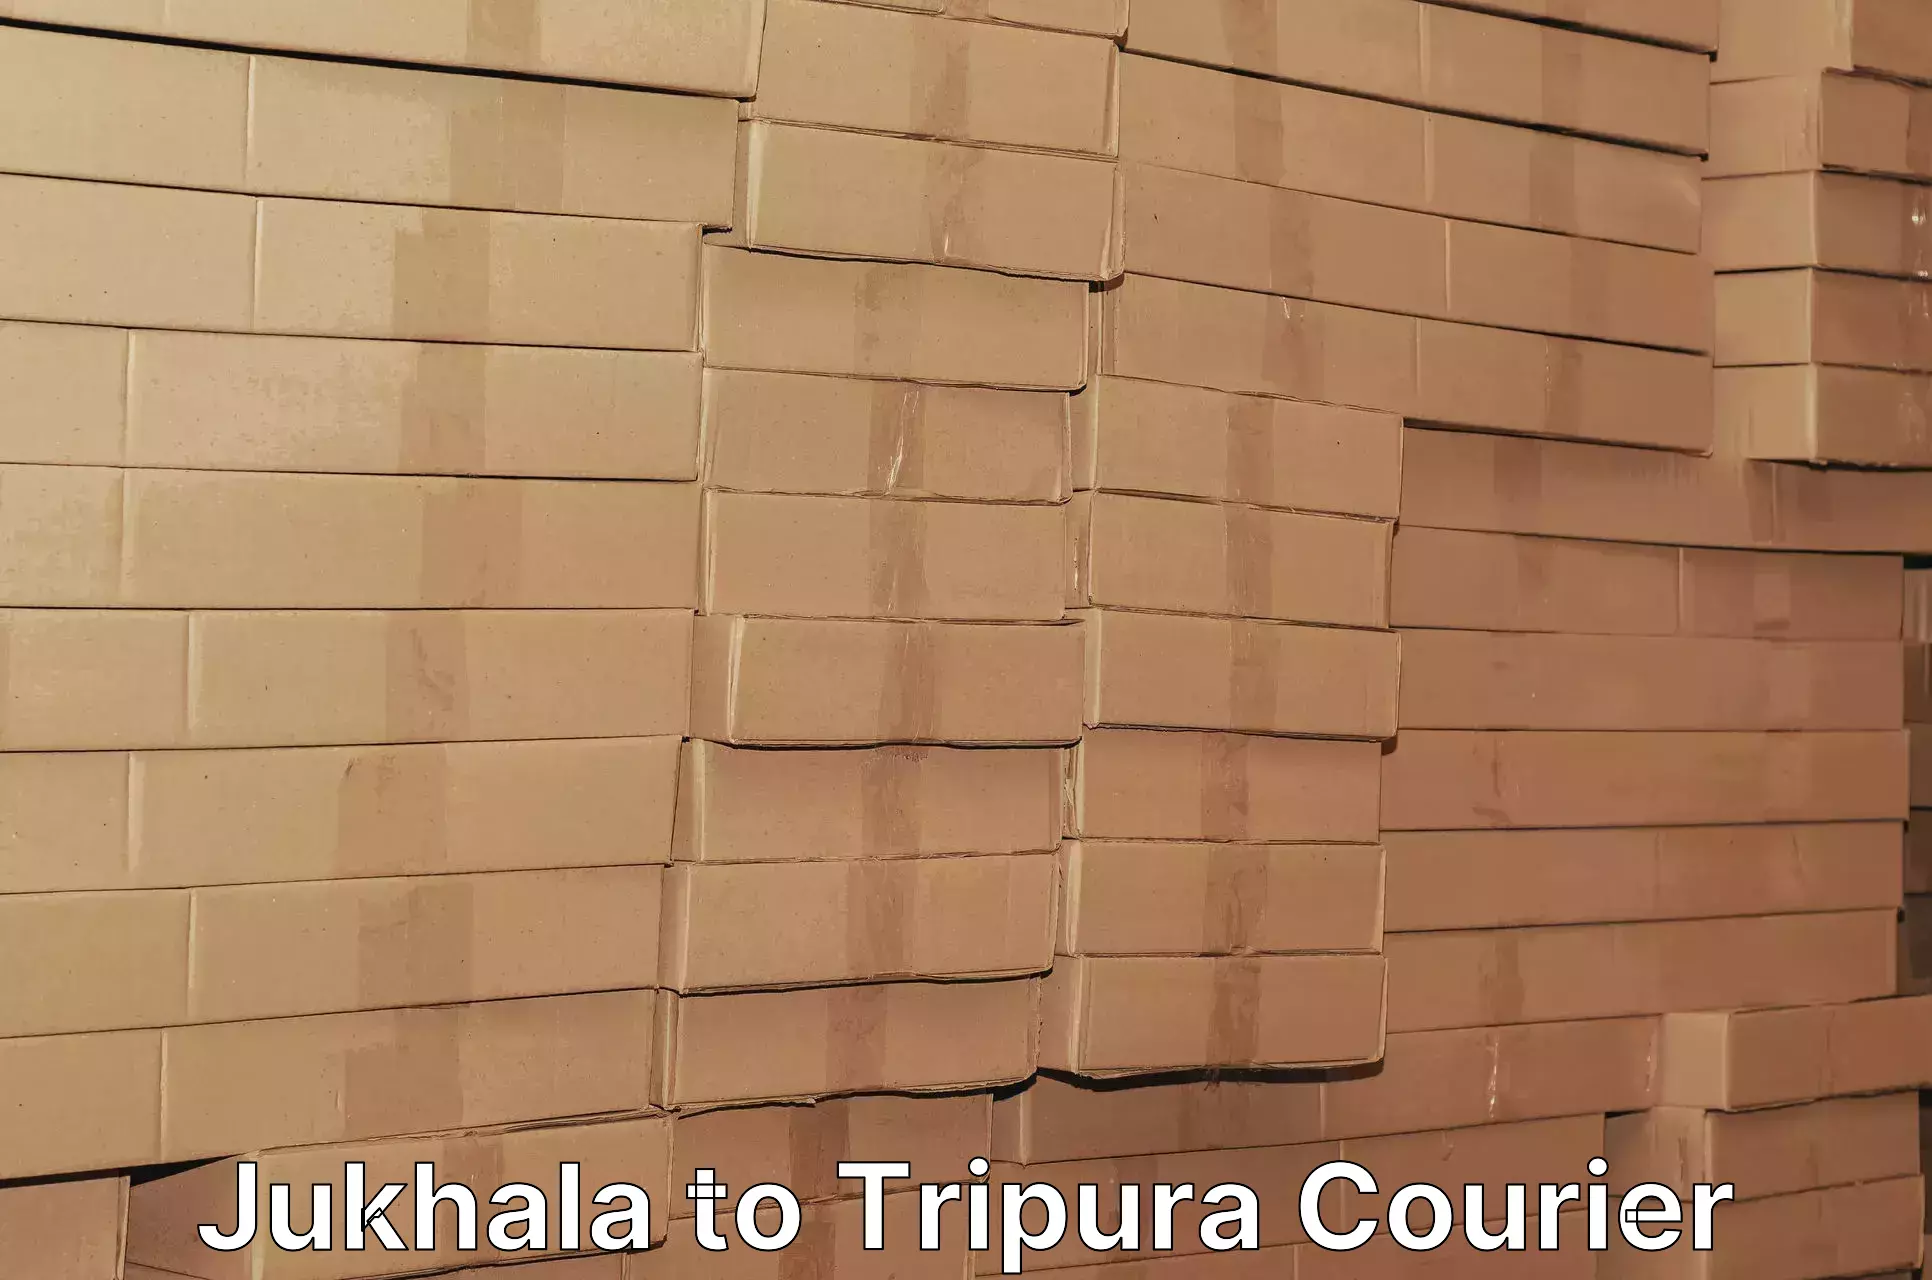 Courier service partnerships Jukhala to Udaipur Tripura